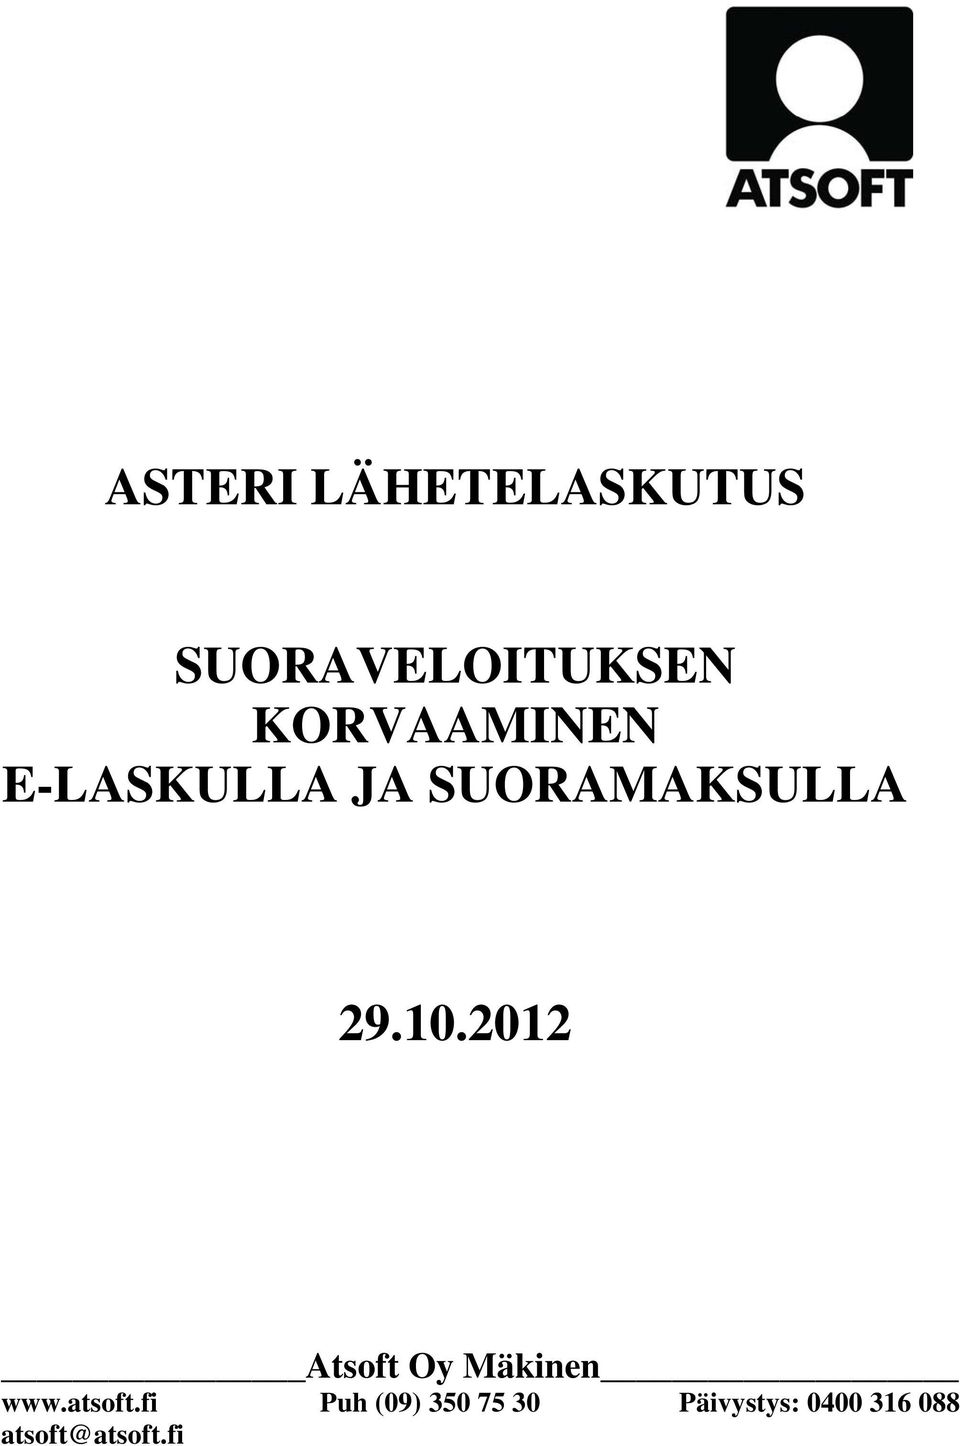 2012 Atsoft Oy Mäkinen www.atsoft.